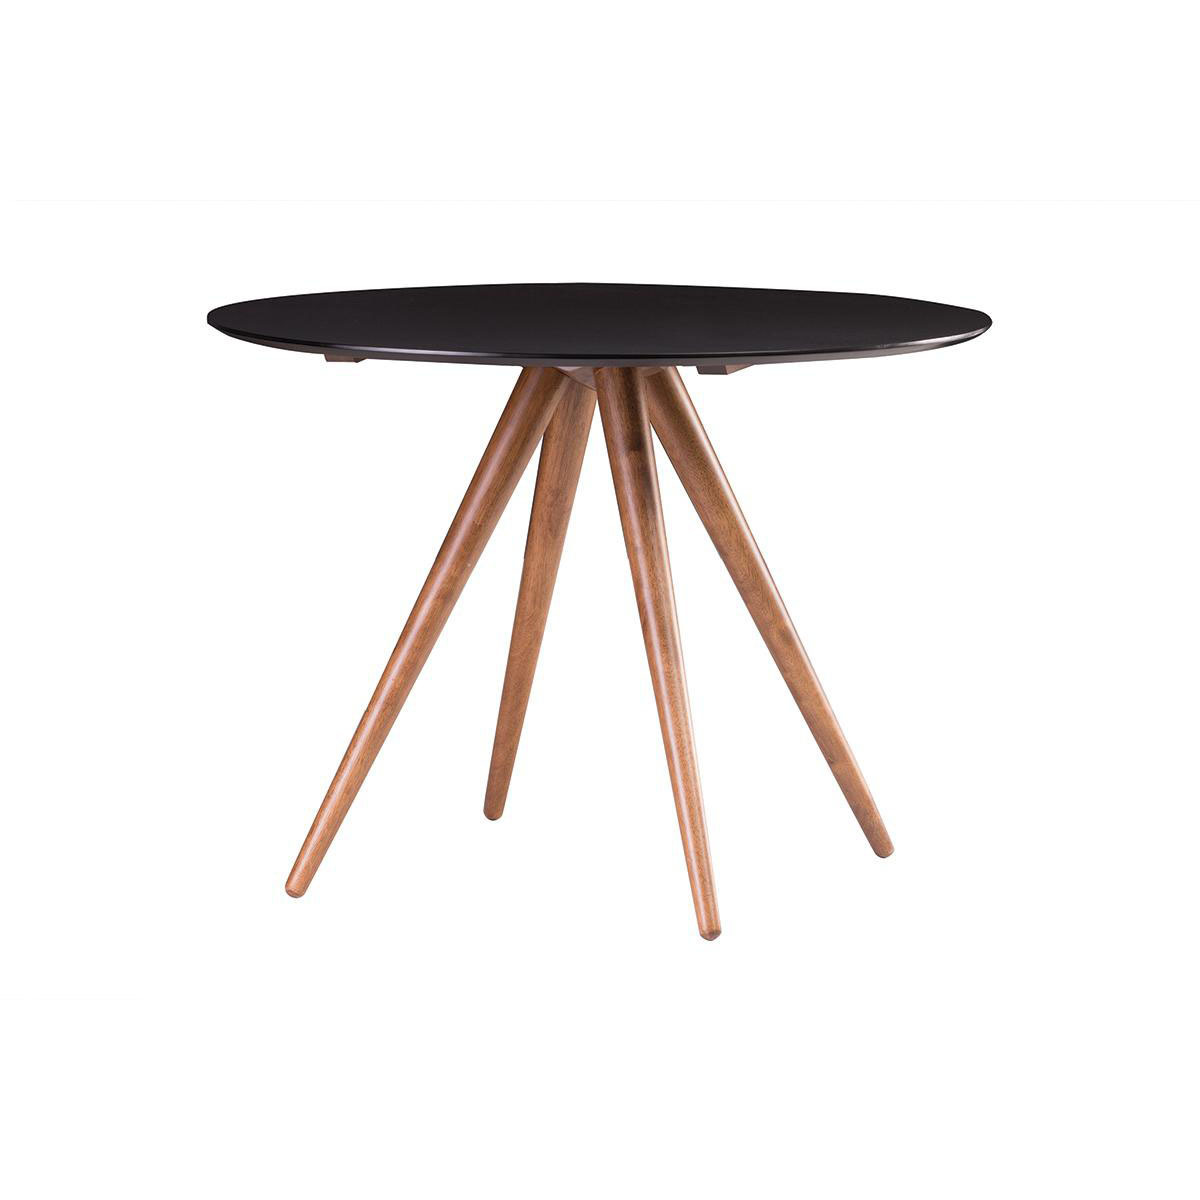 Table à manger ronde design noyer et noir D106 cm WALFORD vue1